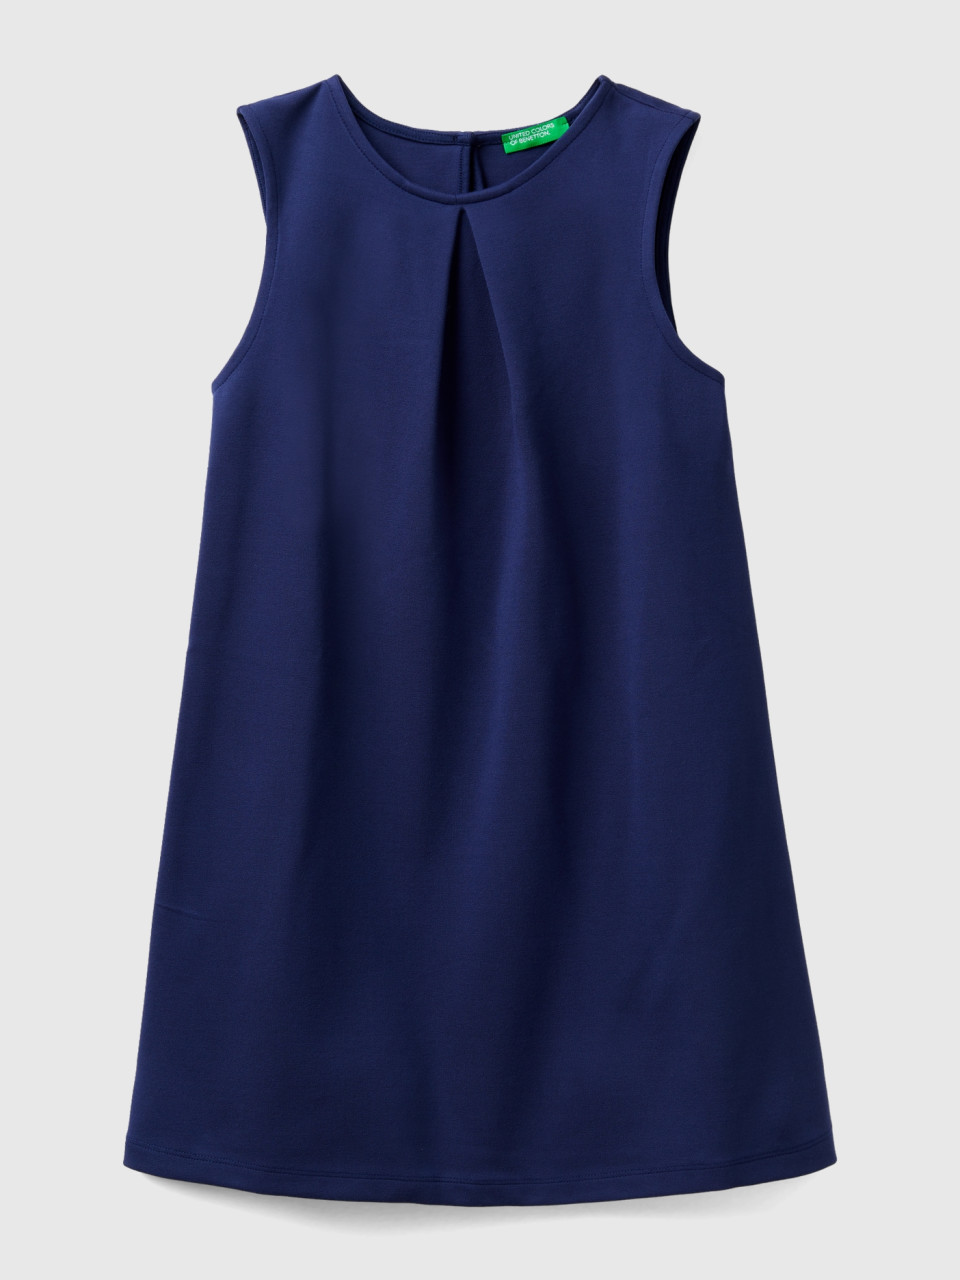 Benetton, Sleeveless Dress, Dark Blue, Kids